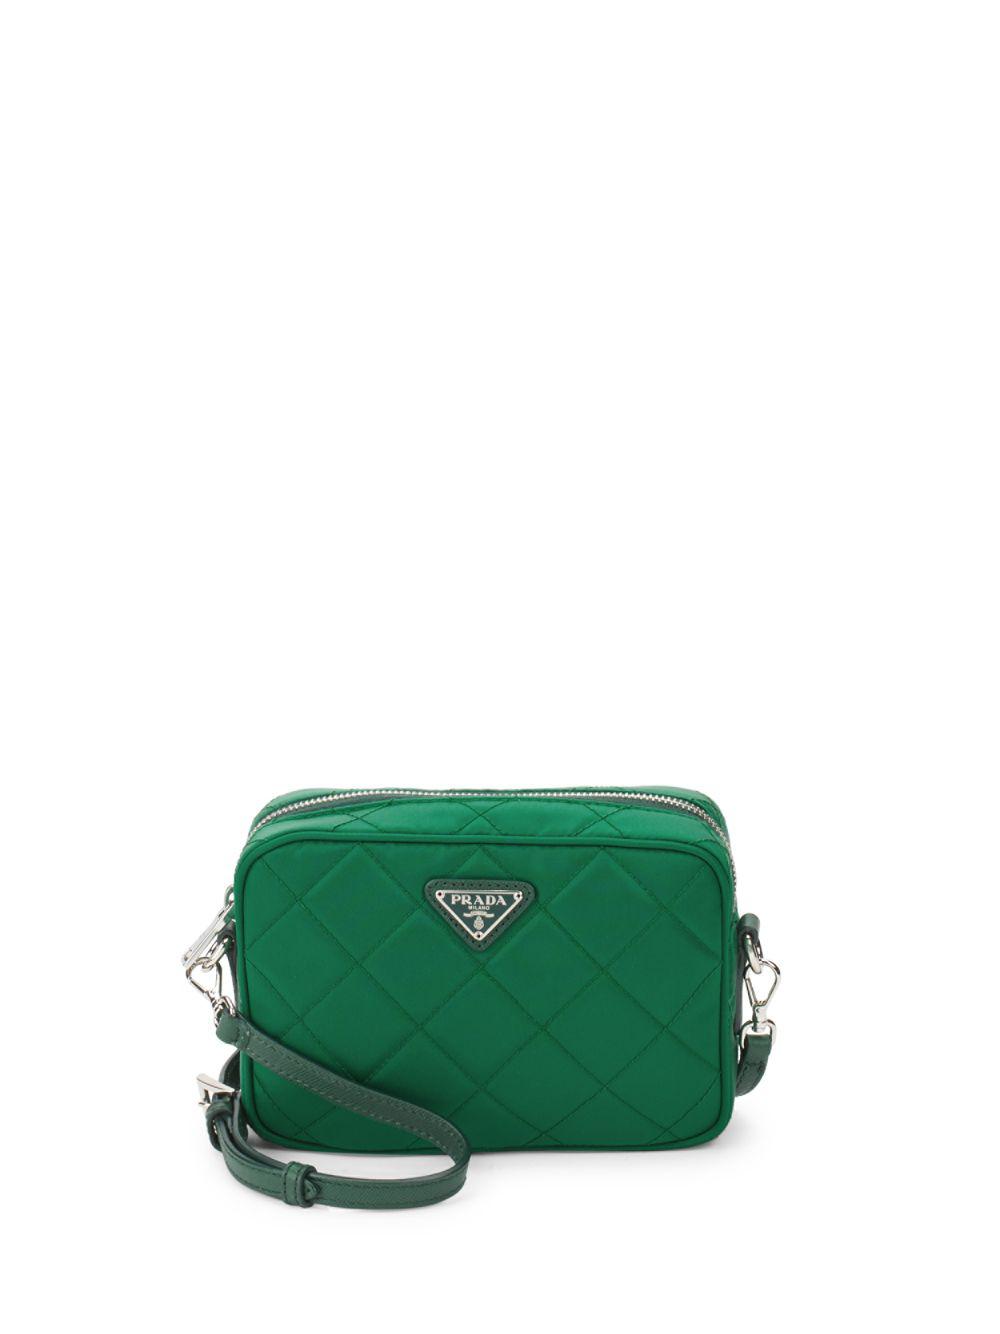 Prada Synthetic Quilted Nylon Crossbody Bag in Dark Green (Green) | Lyst